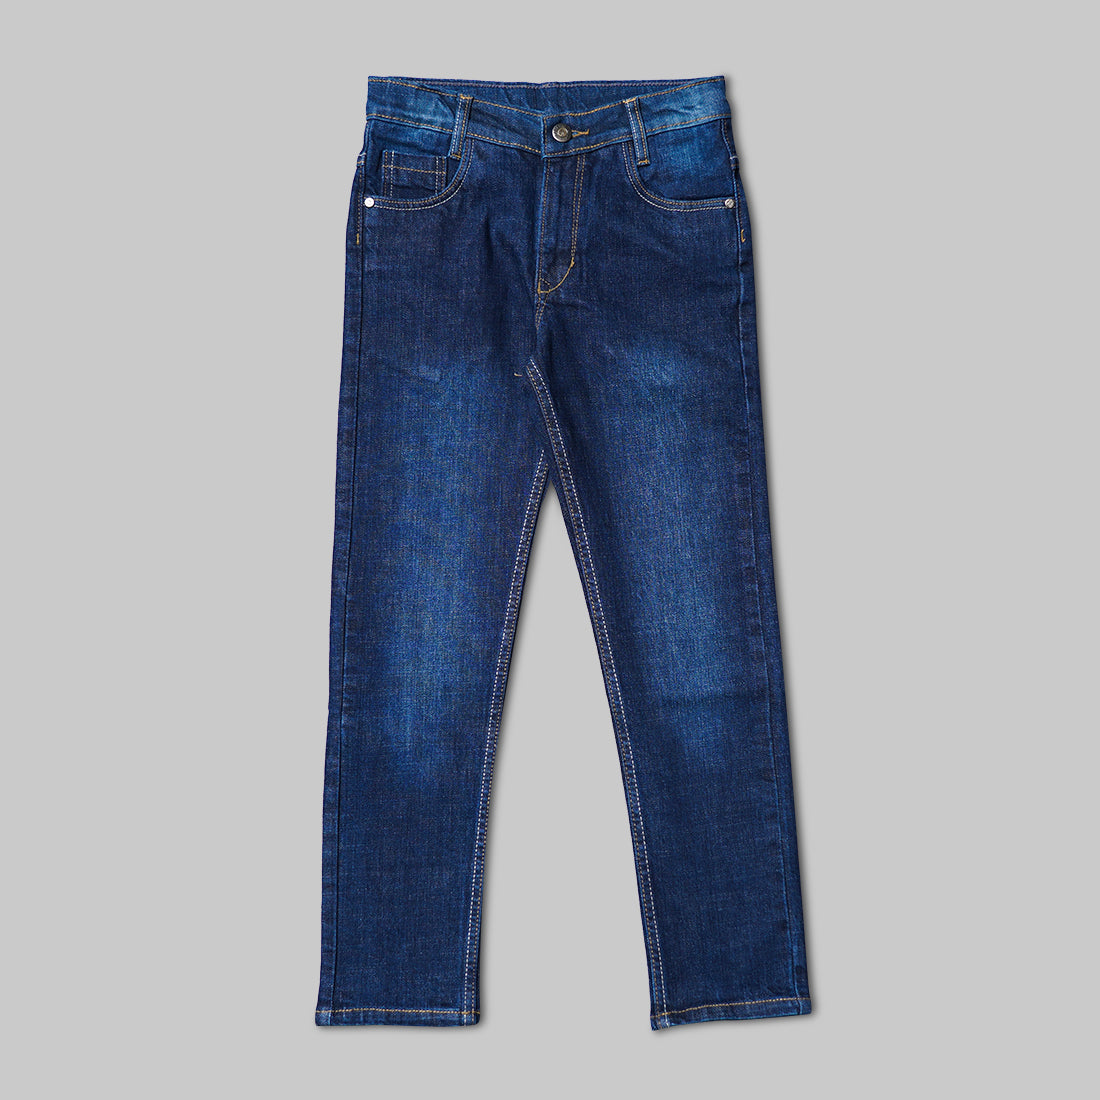 Verrio Men's Casual Jeans Pants Street Style Slim Fit India | Ubuy